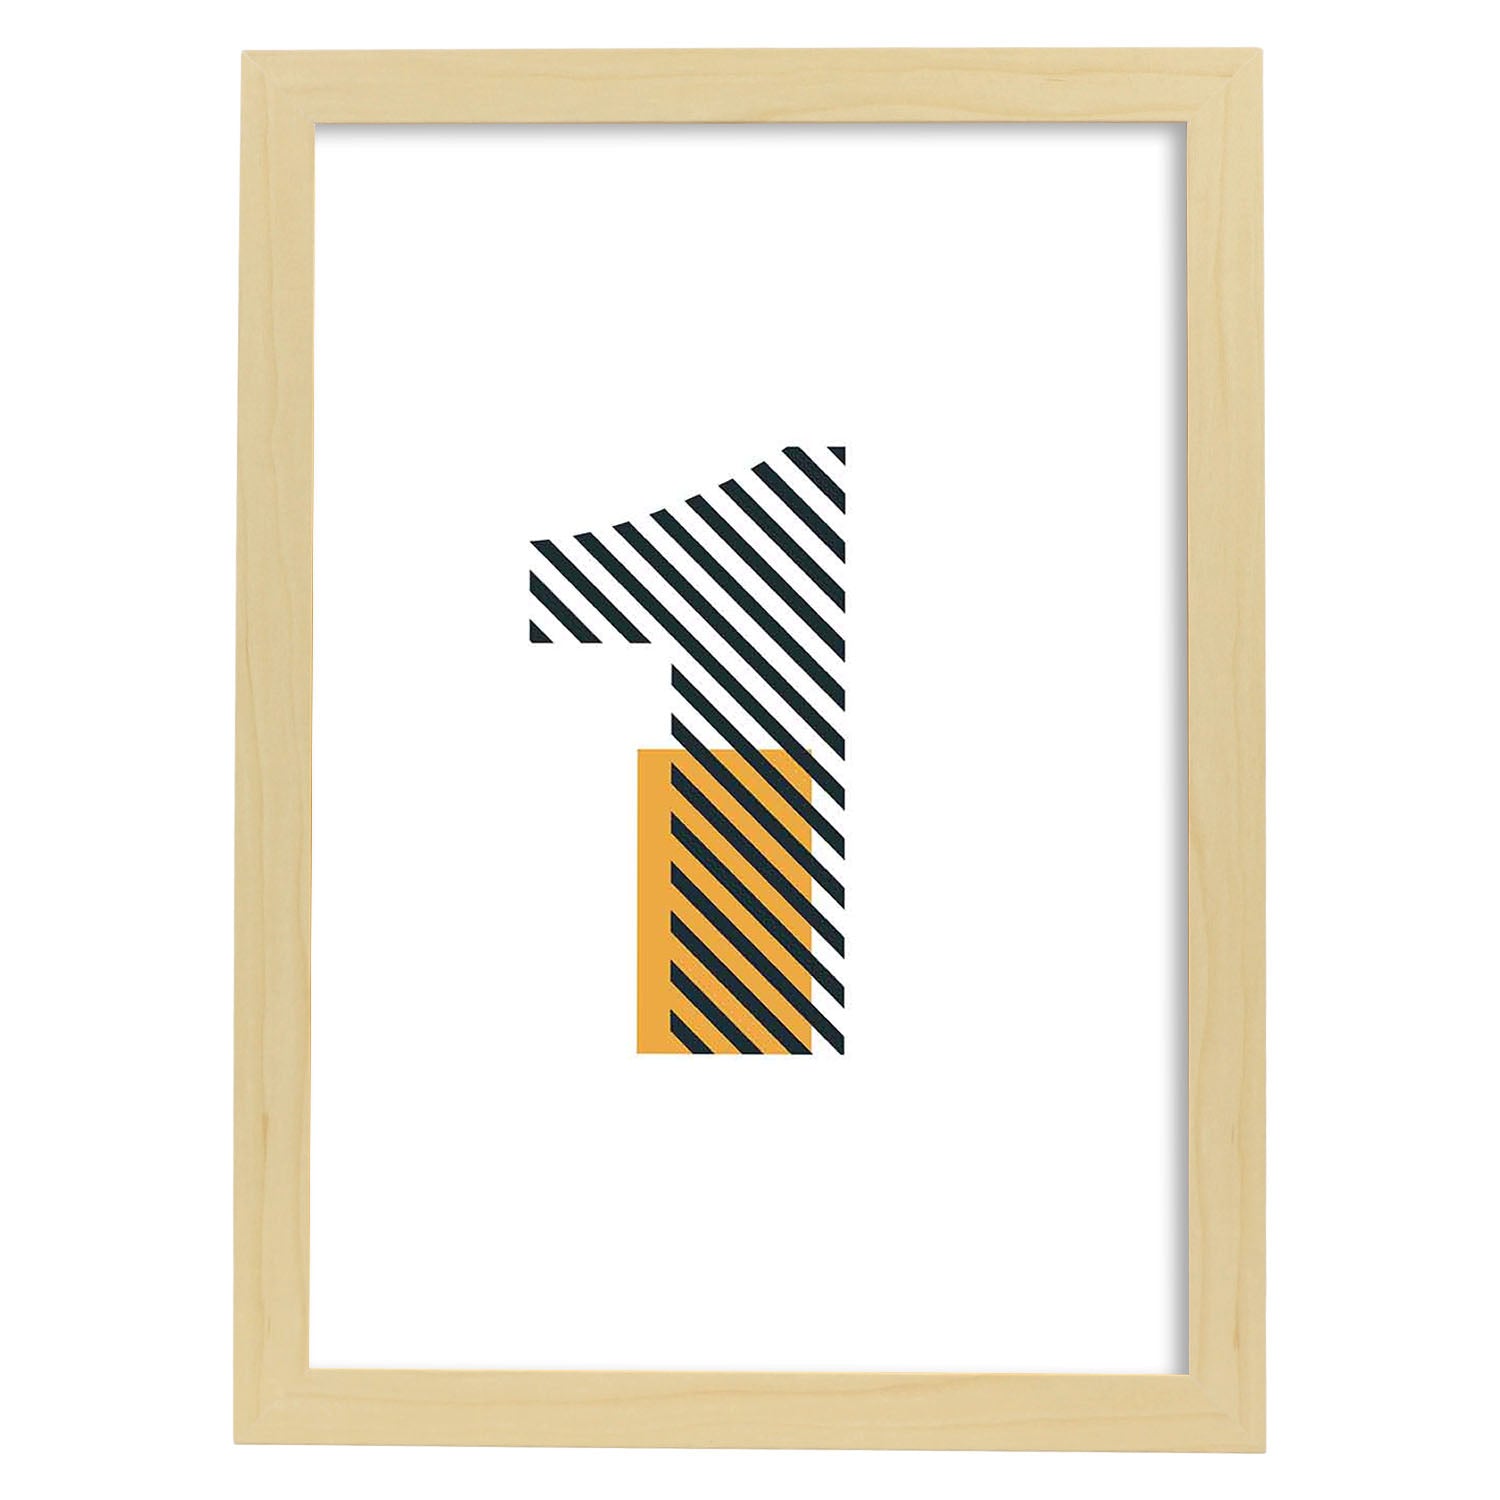 Poster de número 1. Lámina estilo Geometria con imágenes del alfabeto.-Artwork-Nacnic-A3-Marco Madera clara-Nacnic Estudio SL